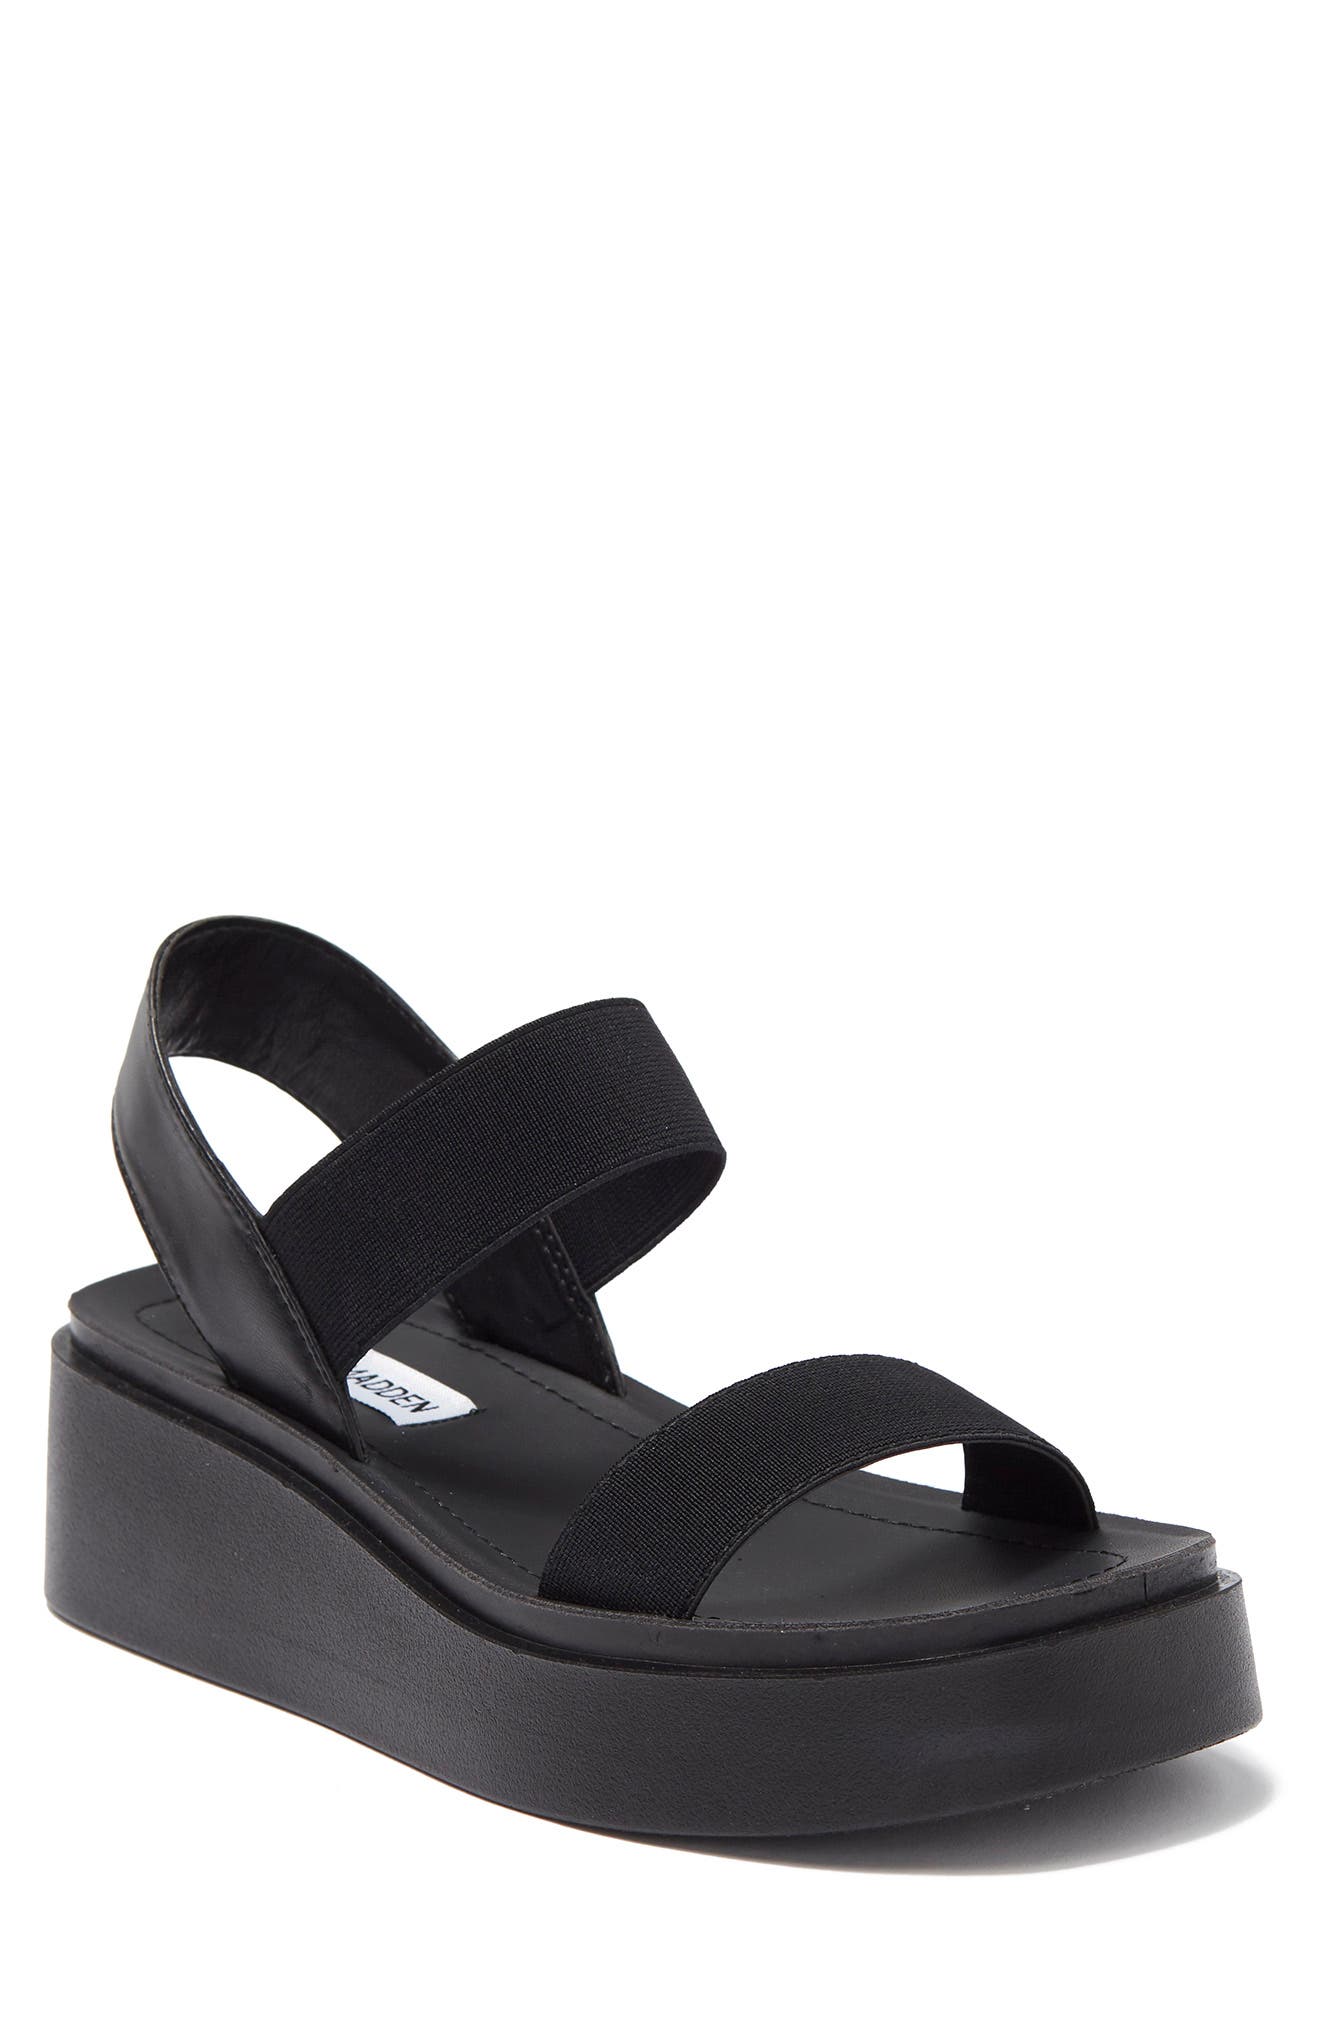 comfortable black platform sandals